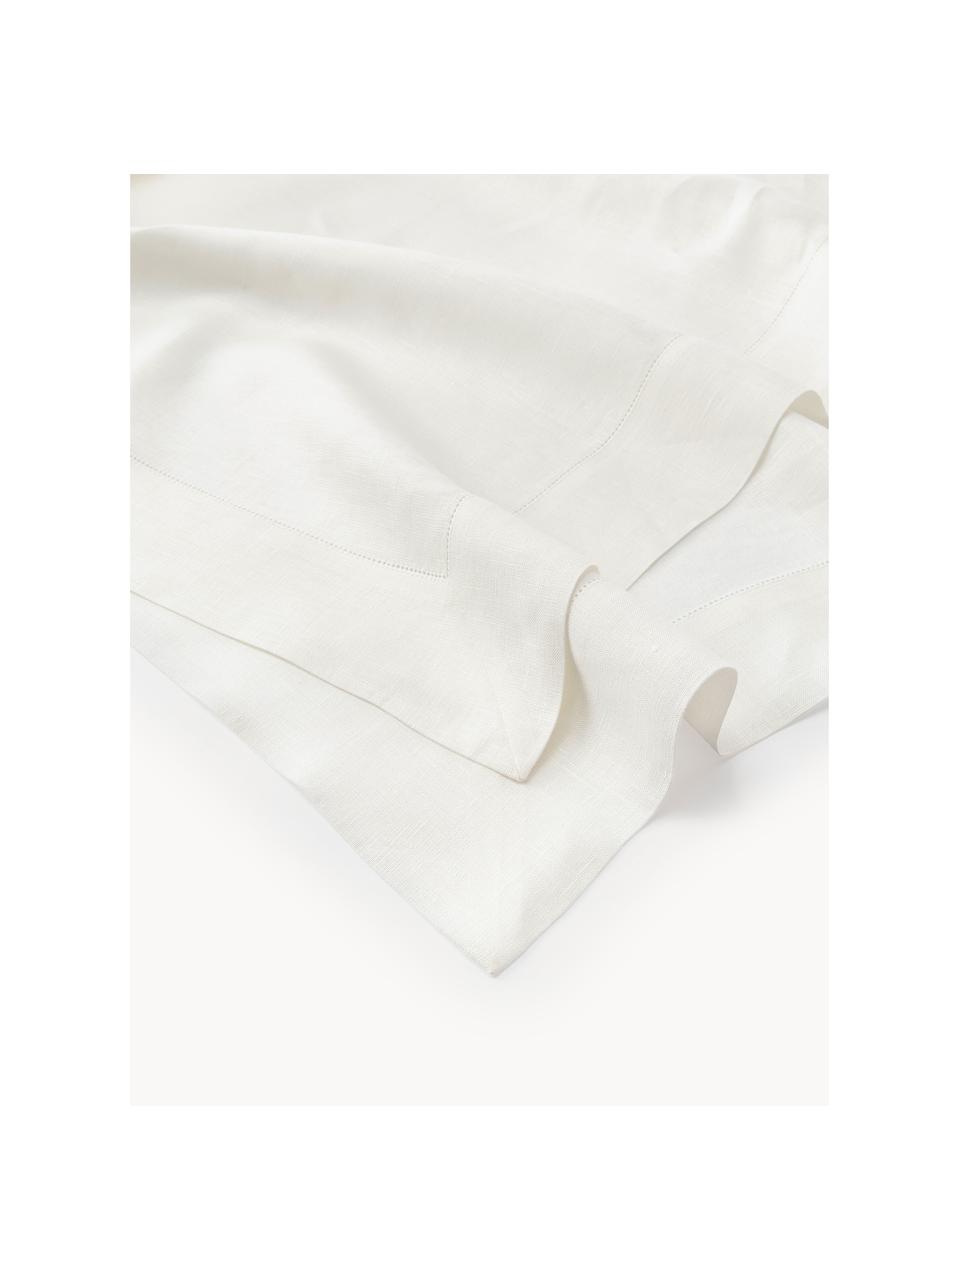 Mantel de lino Alanta, Blanco crema, De 2 a 4 comensales (L 120 x An 120 cm)